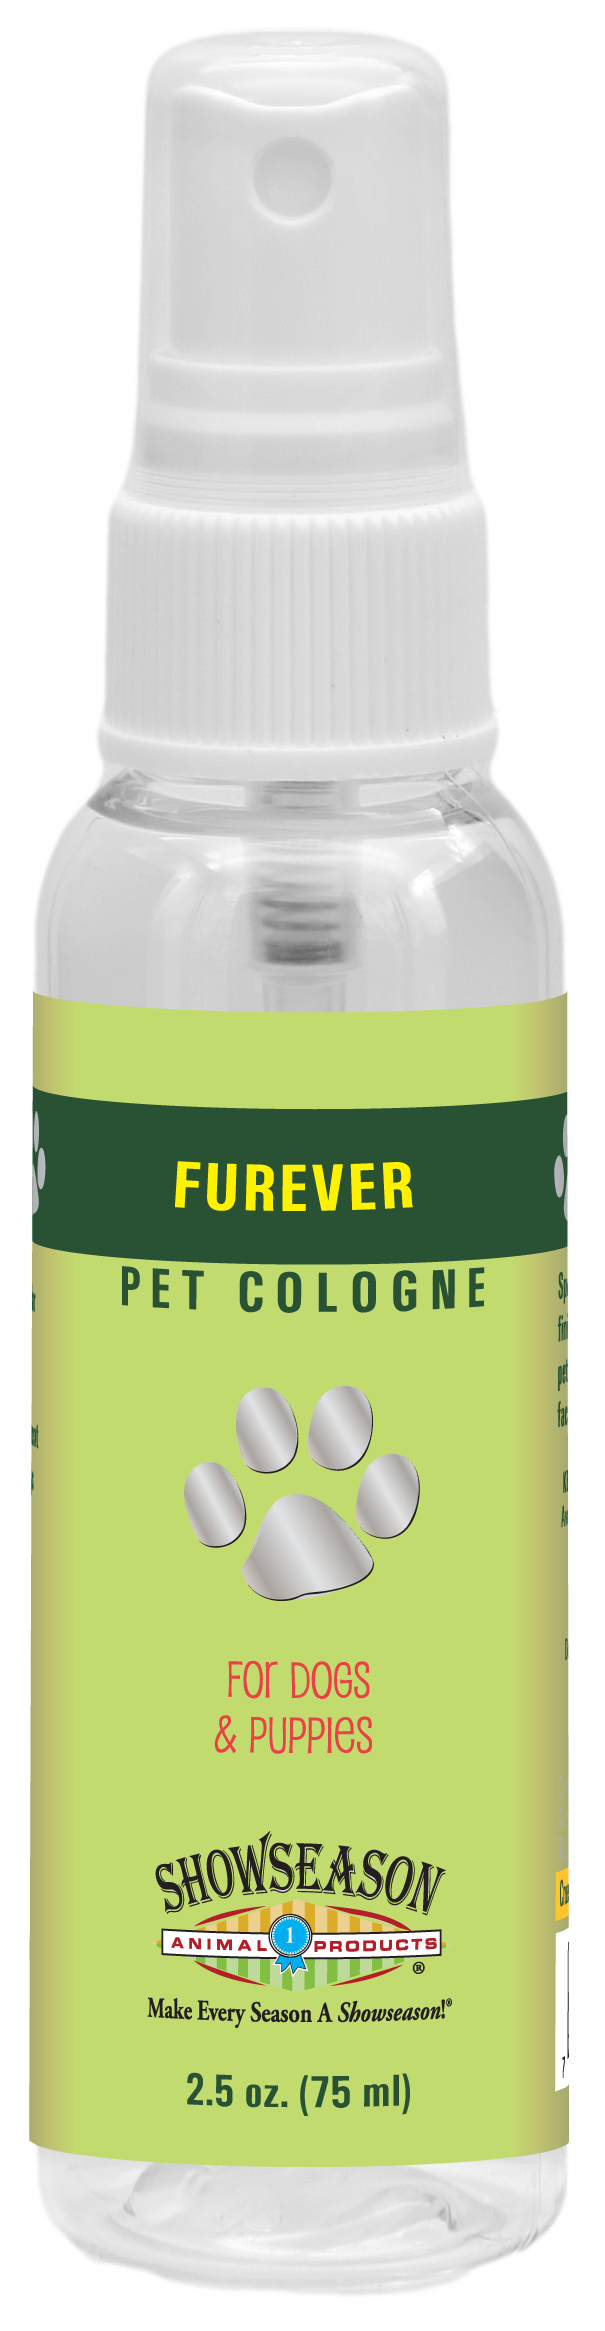 Furever Pet Cologne